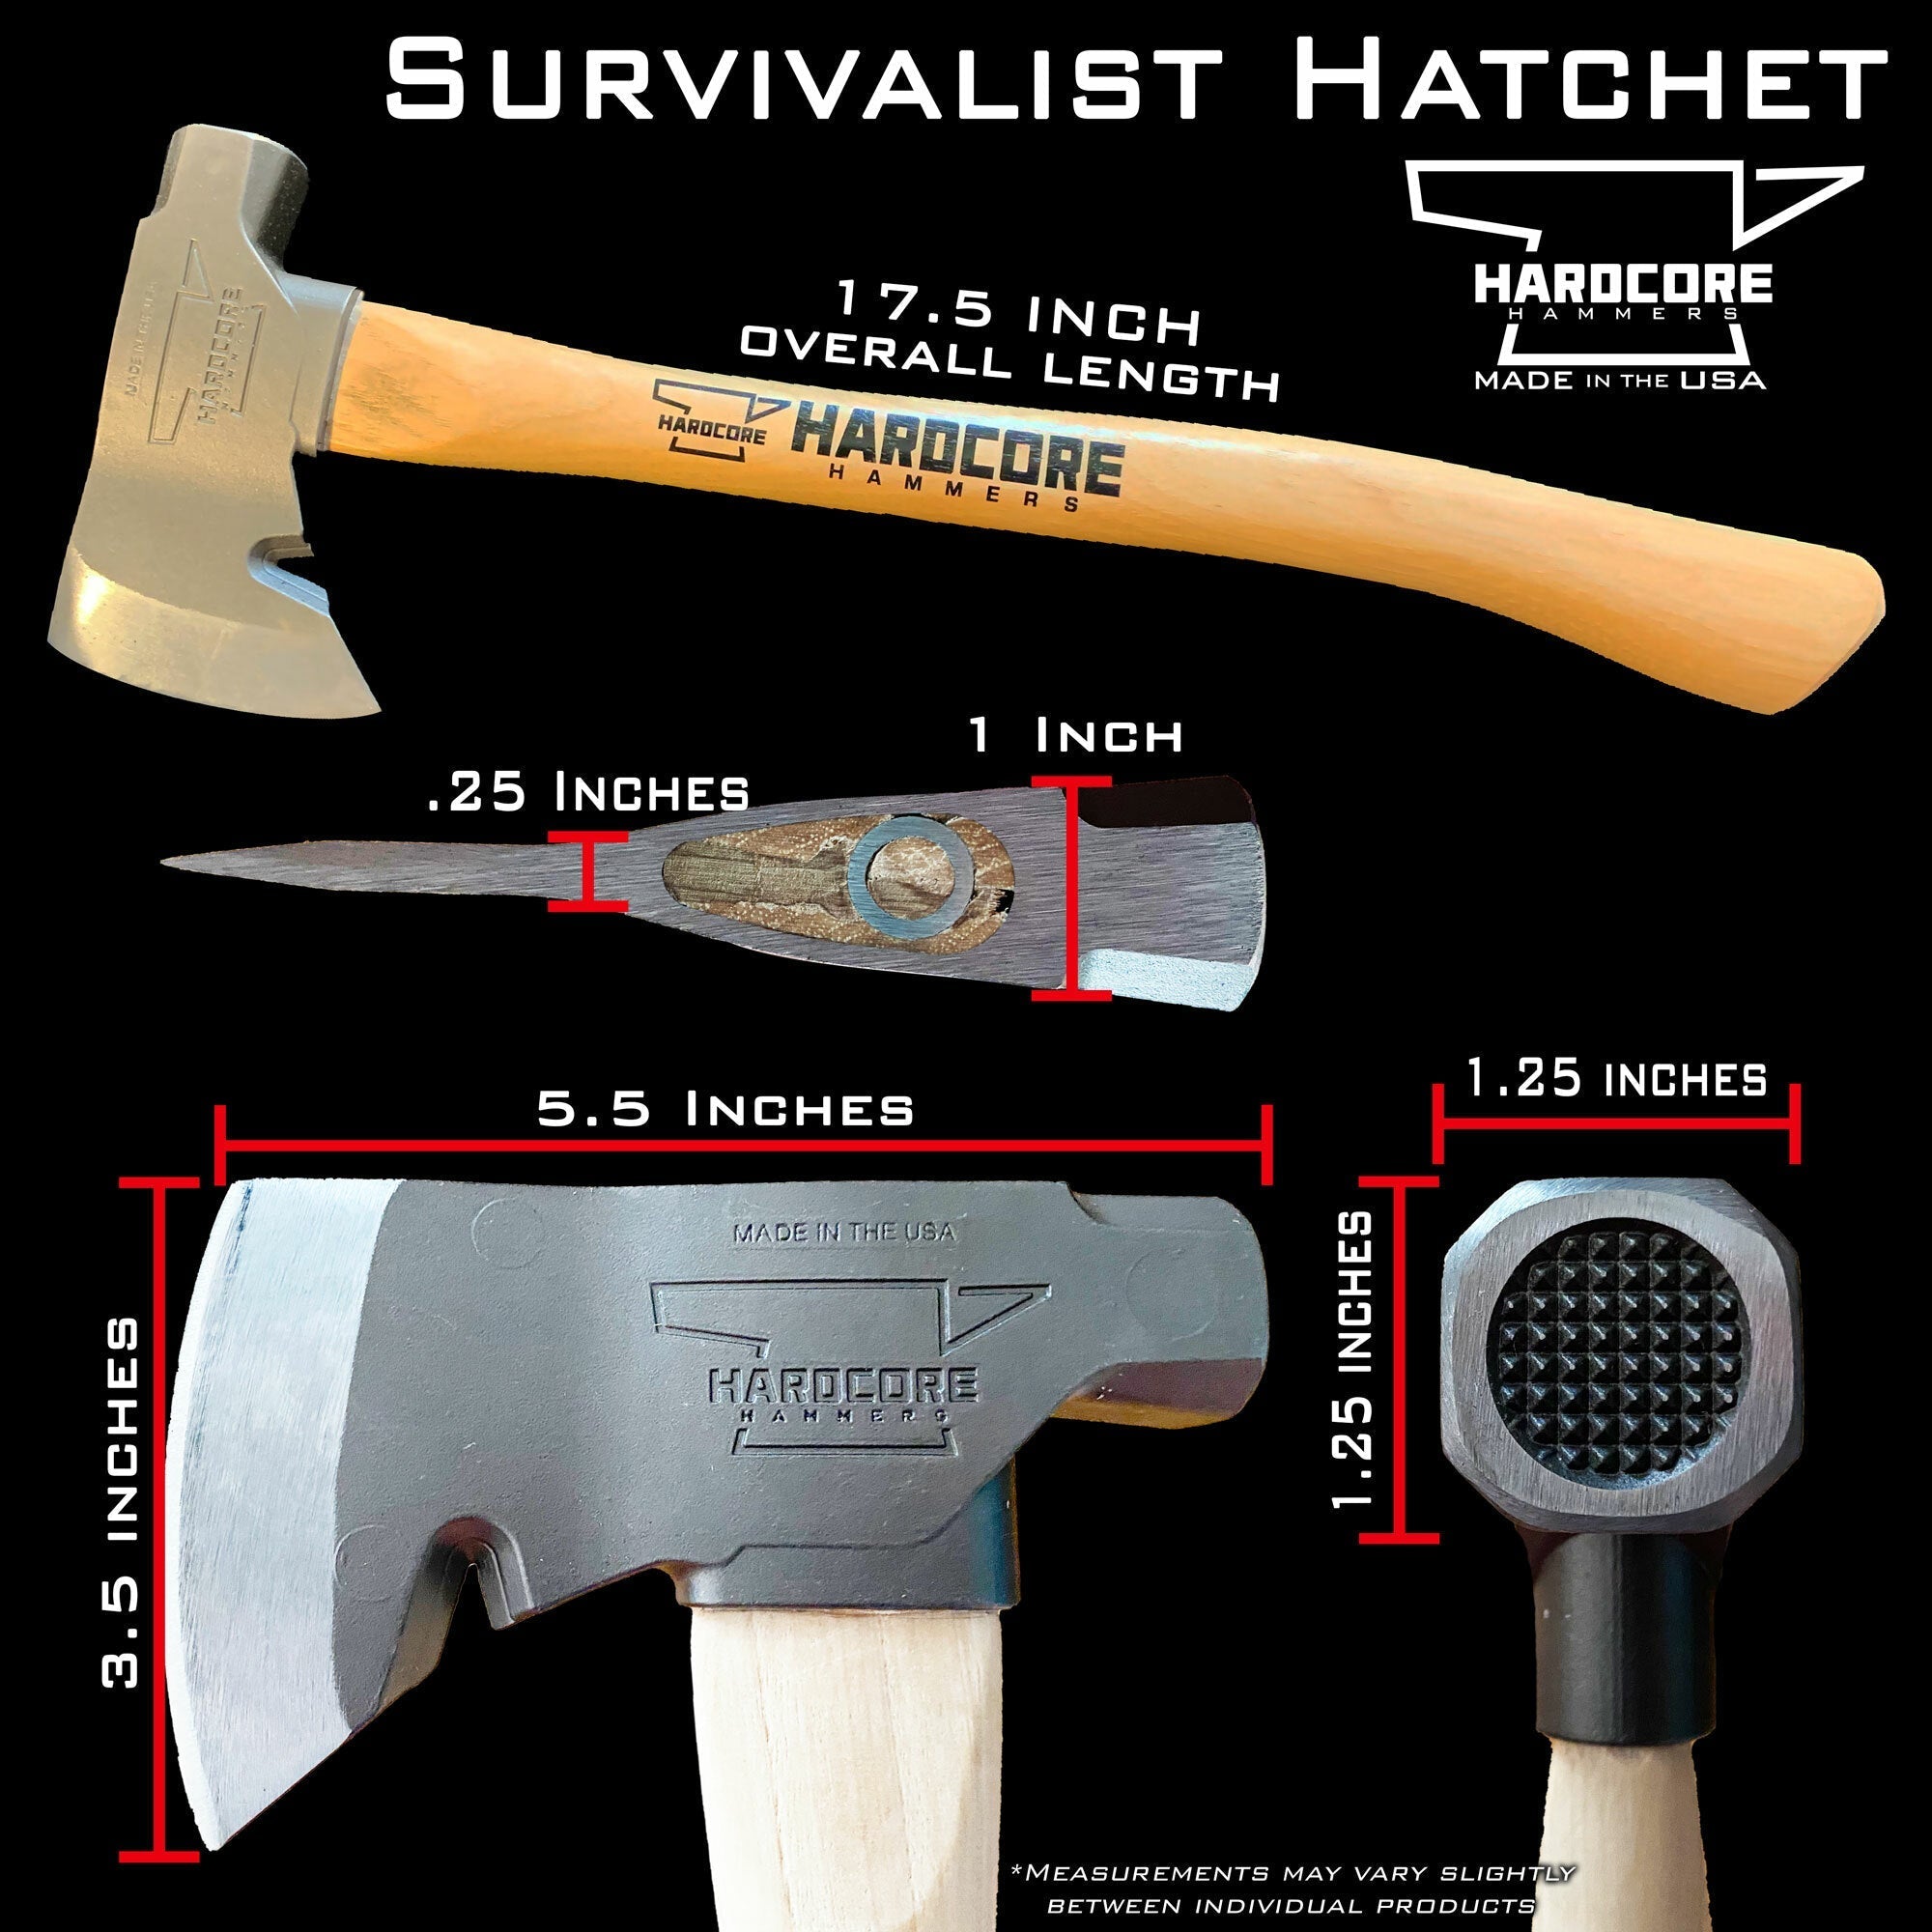 Hardcore Blackened Survivalist Hatchet - Envy Green - Trusted Gear Company LLC